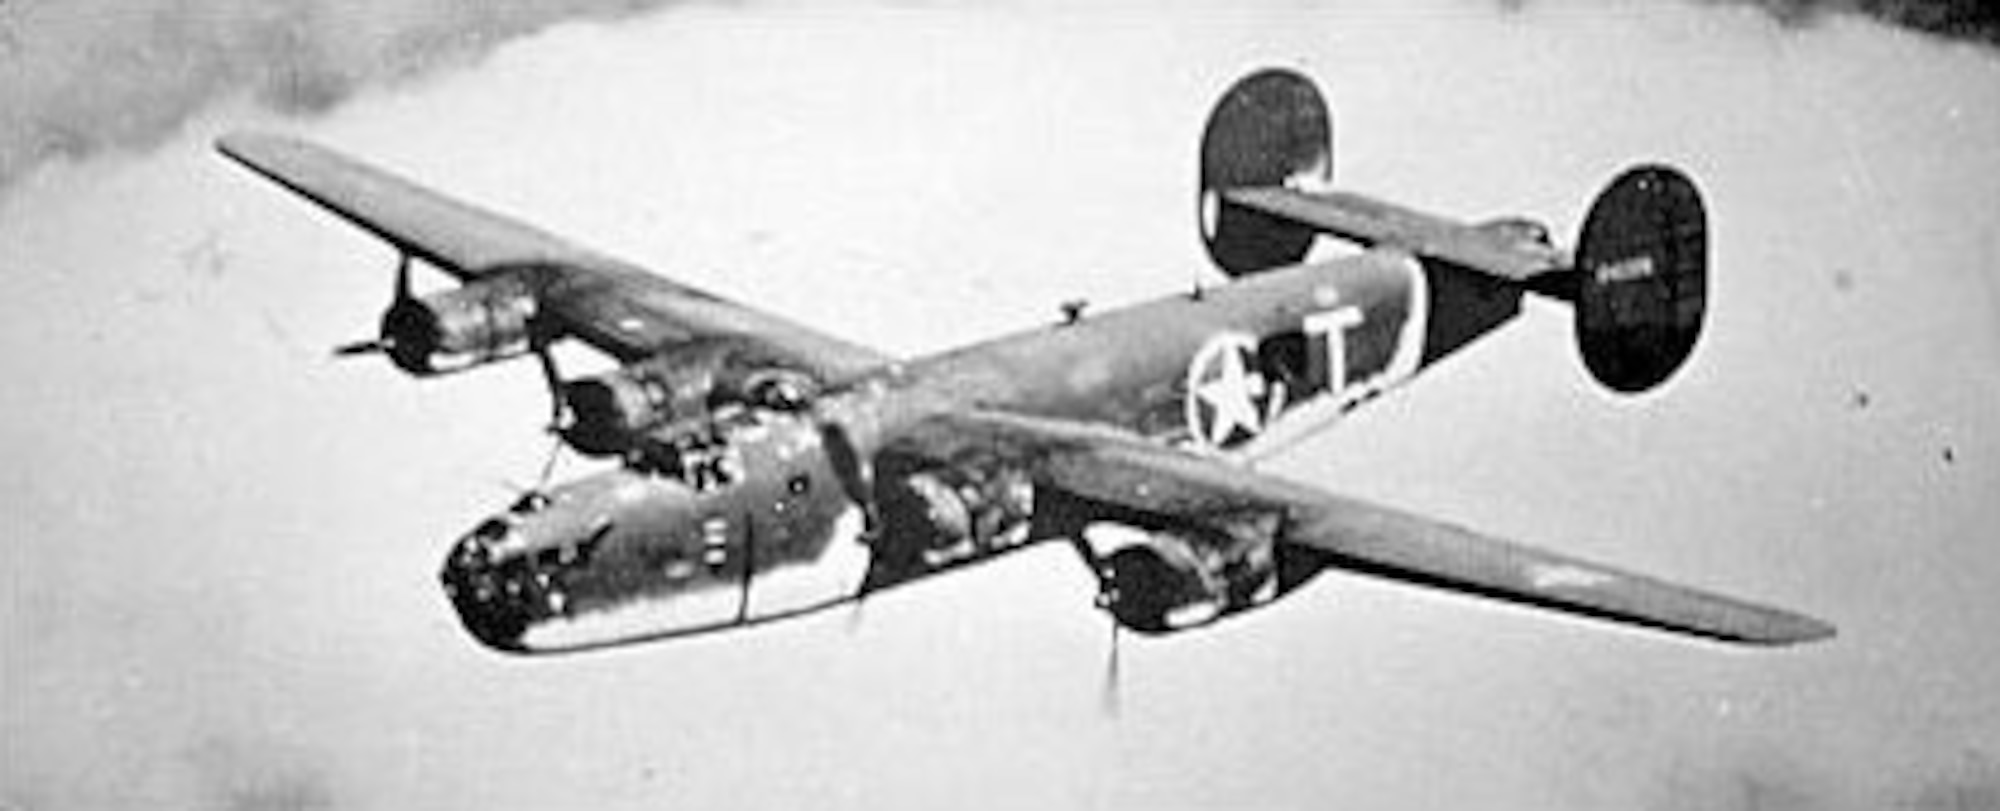 In March 1942, the Civil Air Patrol began making offshore patrol flights in unarmed light planes to help defend against U-boat attacks. (U.S. Air Force photo)